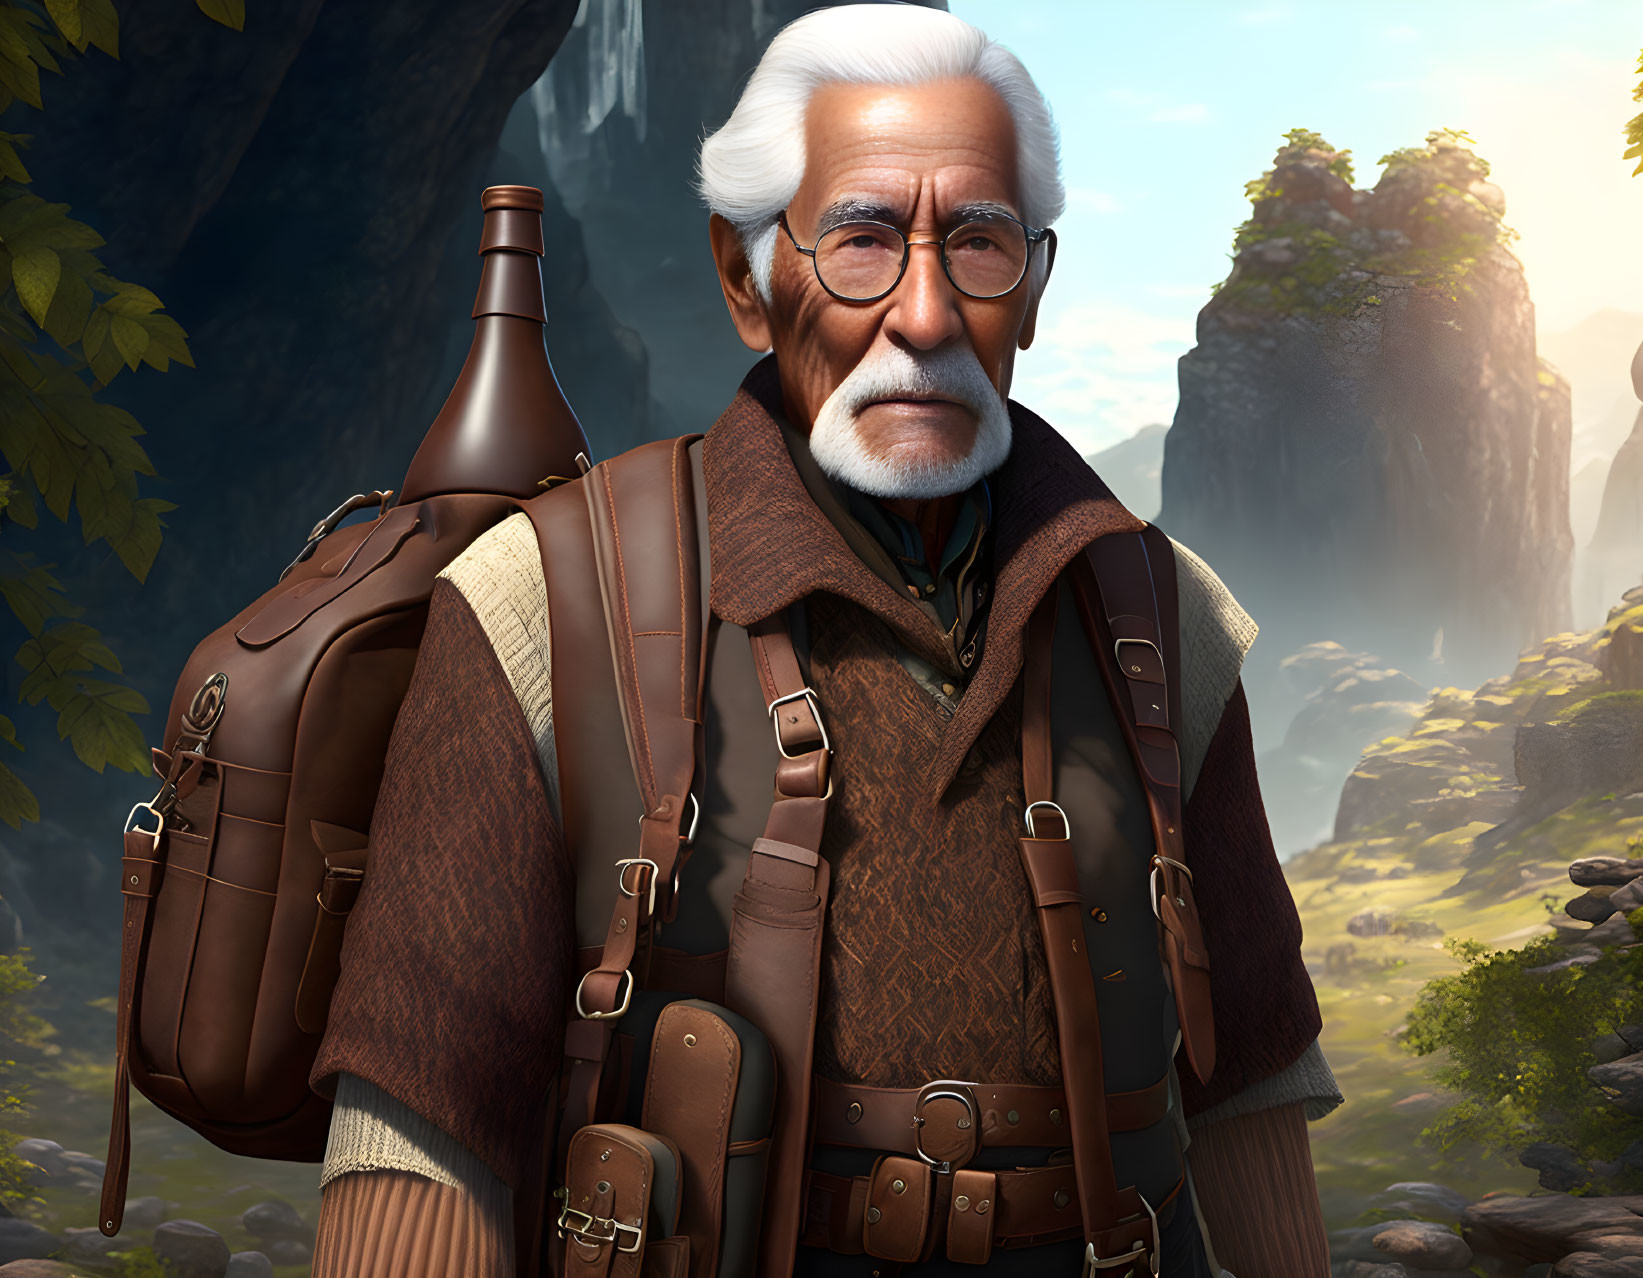 Elderly adventurer with white beard in mountainous landscape